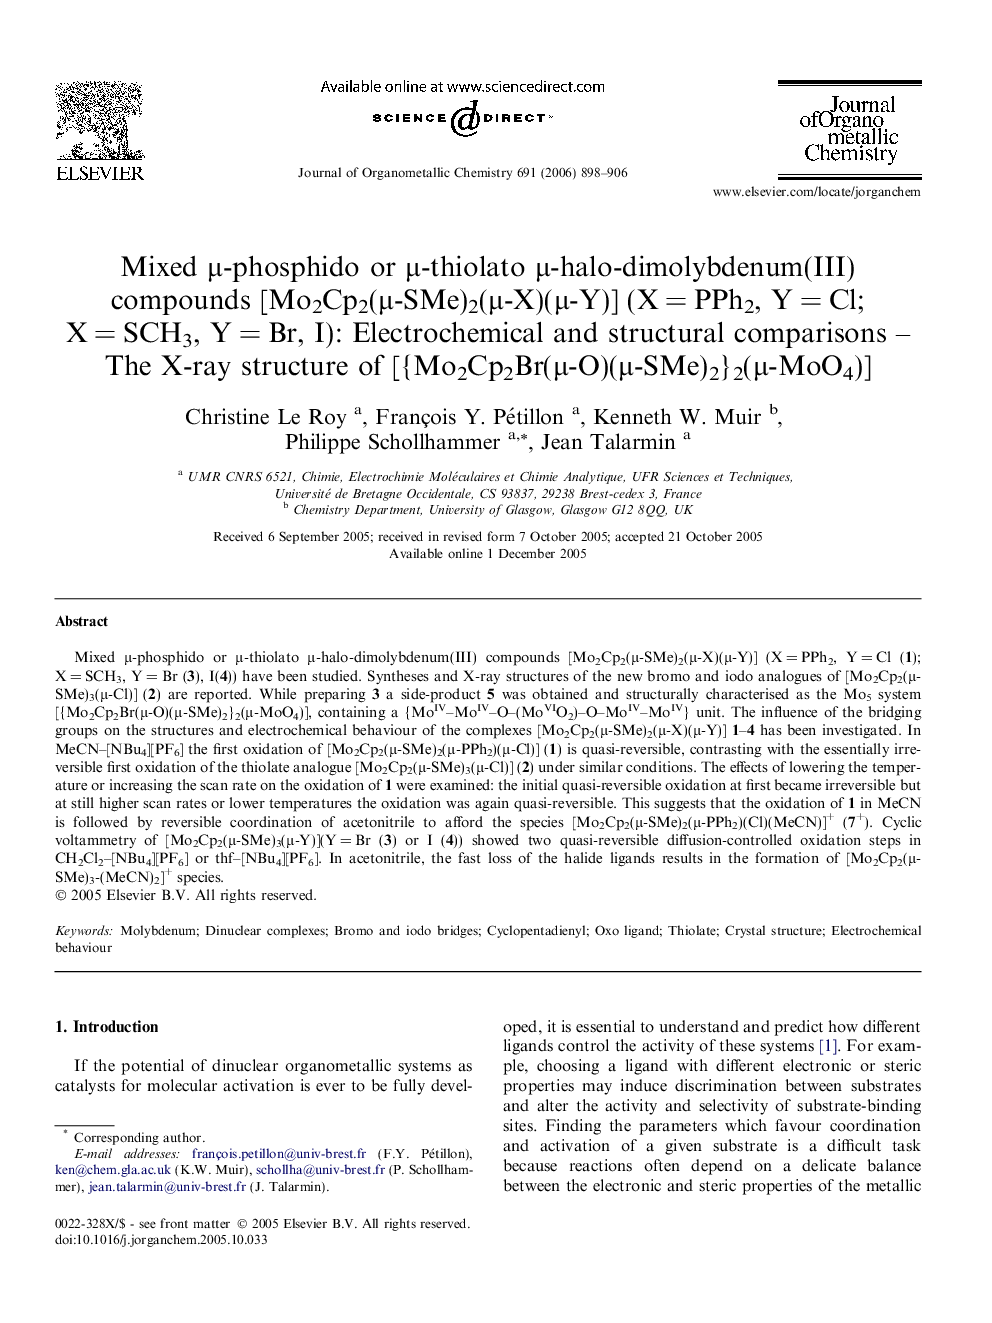 Mixed Î¼-phosphido or Î¼-thiolato Î¼-halo-dimolybdenum(III) compounds [Mo2Cp2(Î¼-SMe)2(Î¼-X)(Î¼-Y)] (XÂ =Â PPh2, YÂ =Â Cl; XÂ =Â SCH3, YÂ =Â Br, I): Electrochemical and structural comparisons - The X-ray structure of [{Mo2Cp2Br(Î¼-O)(Î¼-SMe)2}2(Î¼-MoO4)]